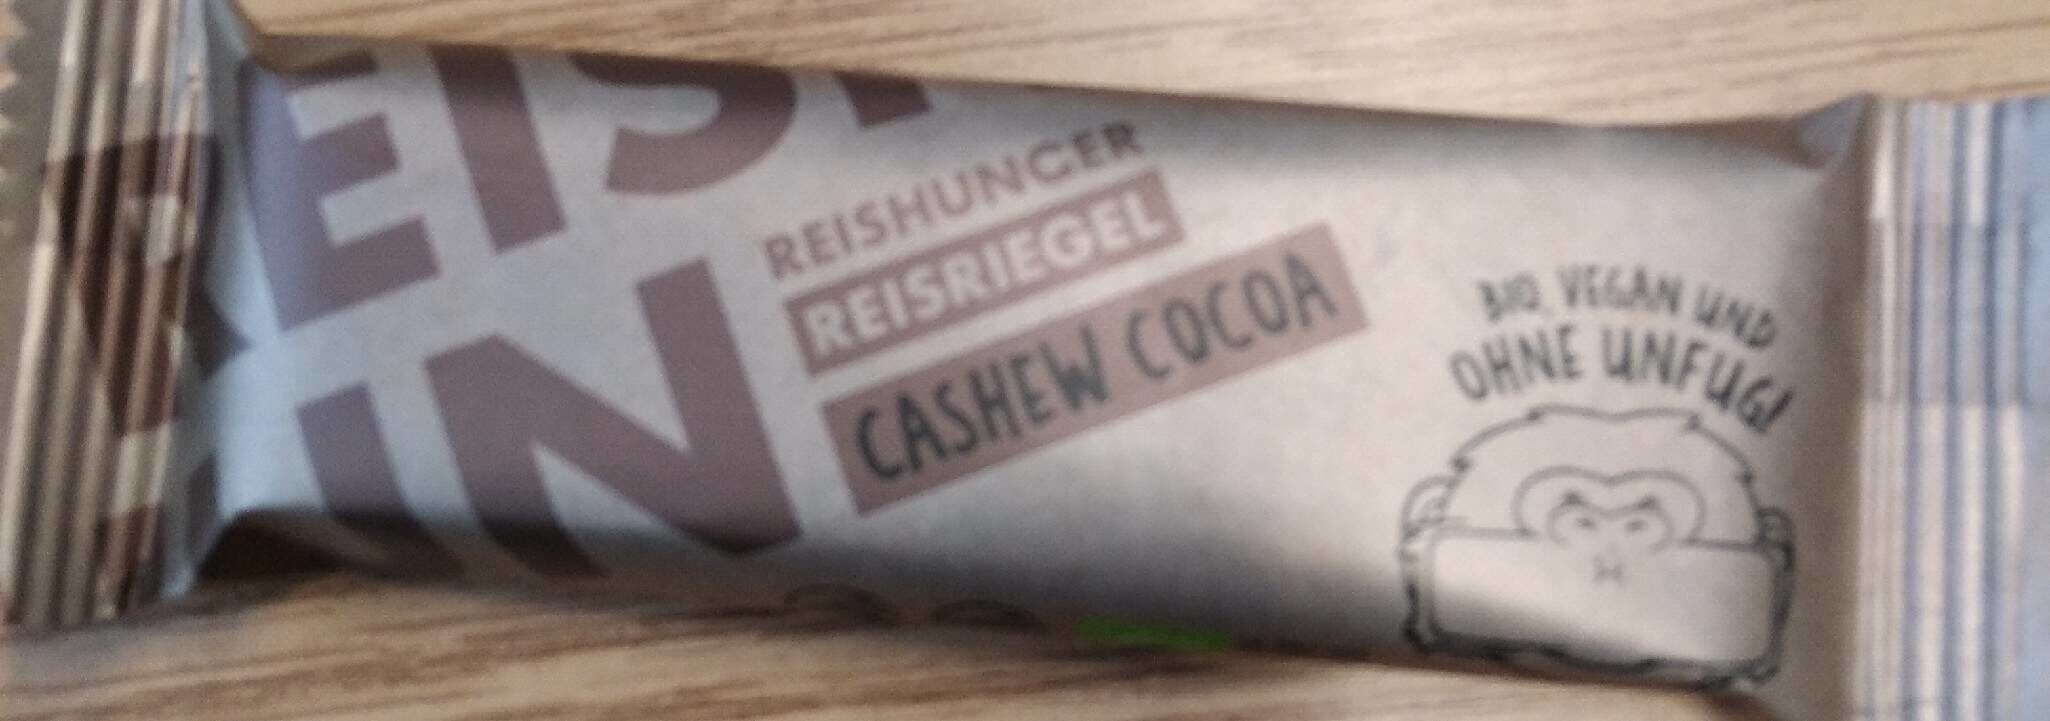 Reißriegel Cashew Cocoa - Product - de